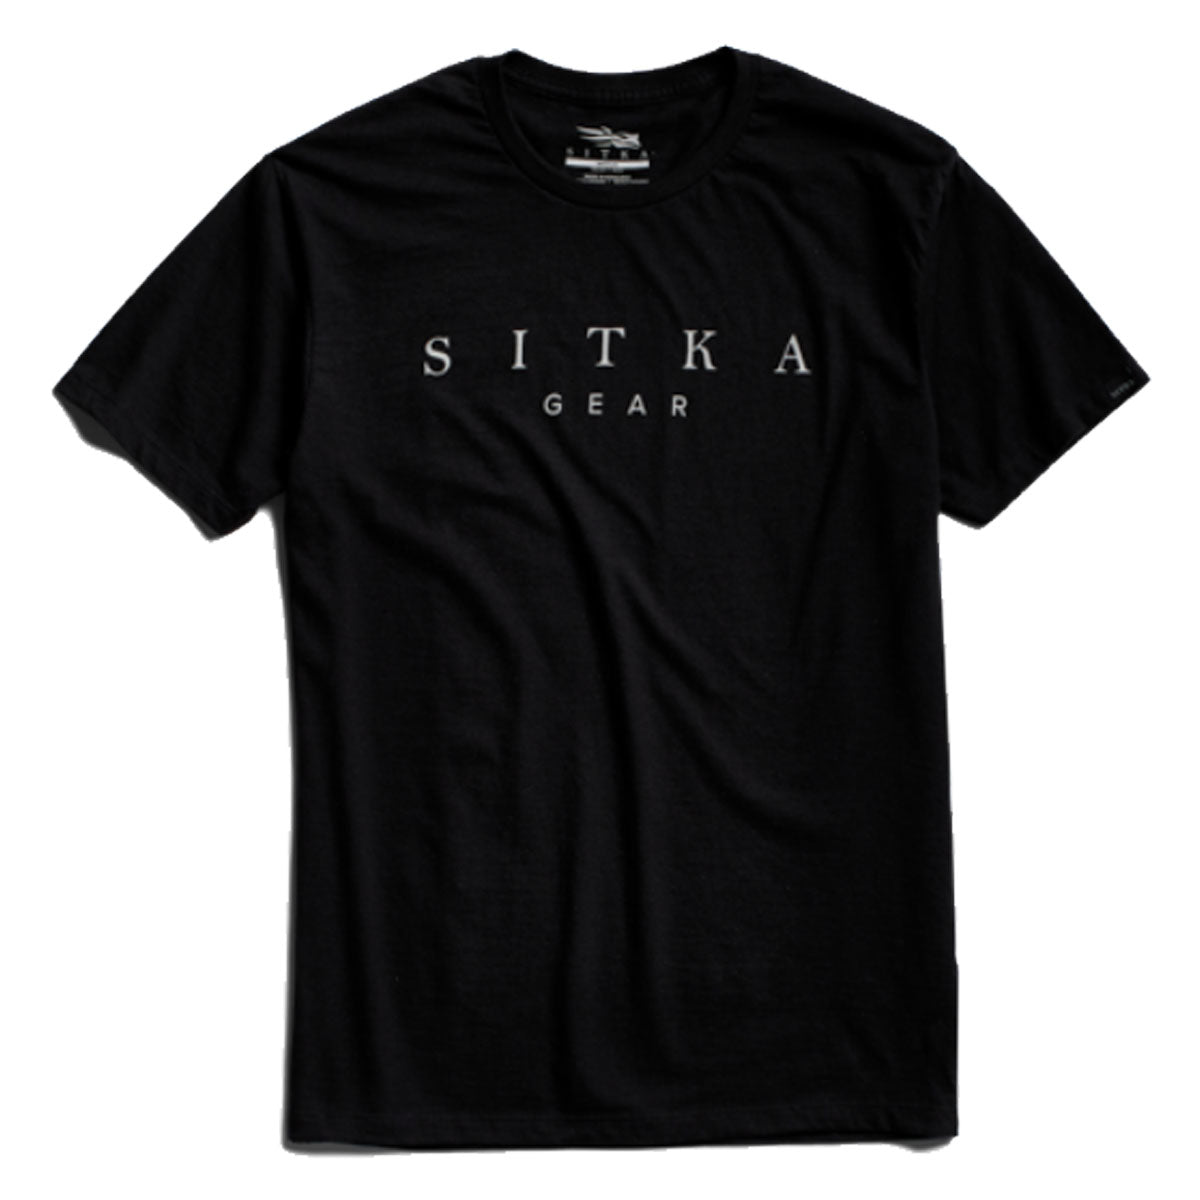 Sitka Legend Tee in  by GOHUNT | Sitka - GOHUNT Shop